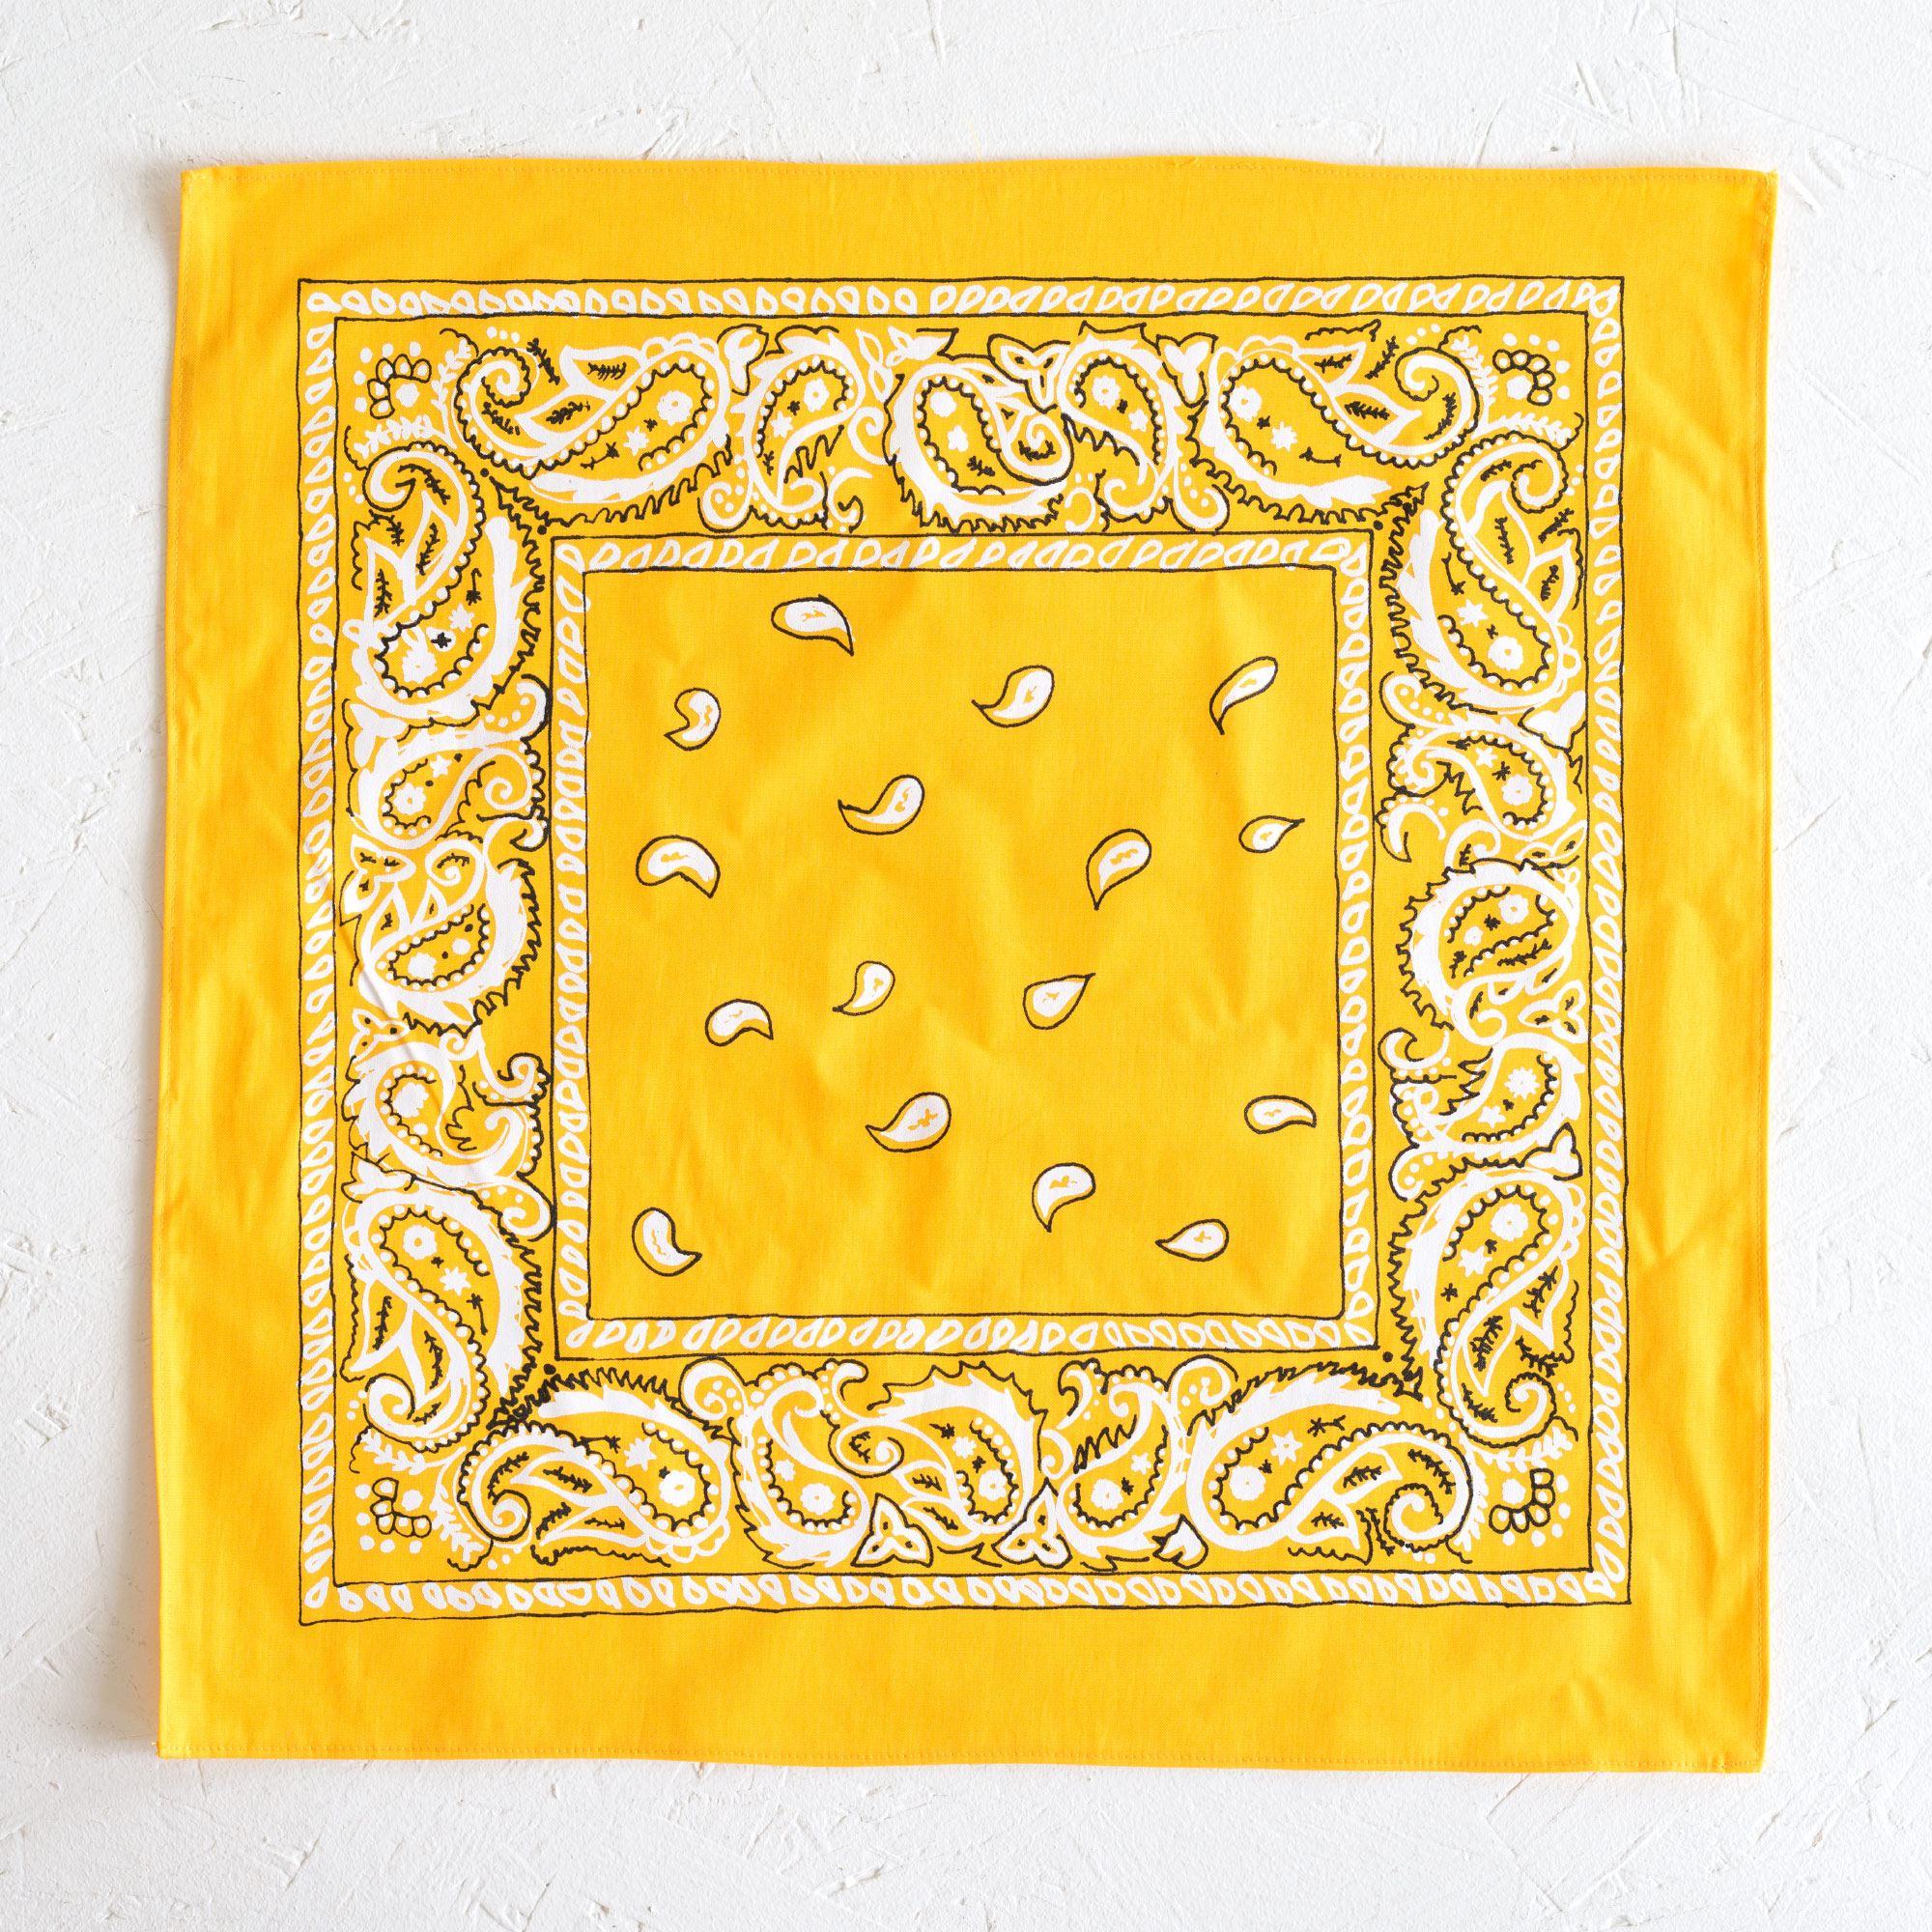 Nancy Davidson, *Hanky Code* (Yellow), 2016, Two color silkscreen on hand cut & sewn cotton, 17 x 17 inches (43.18 x 43.18 cm)